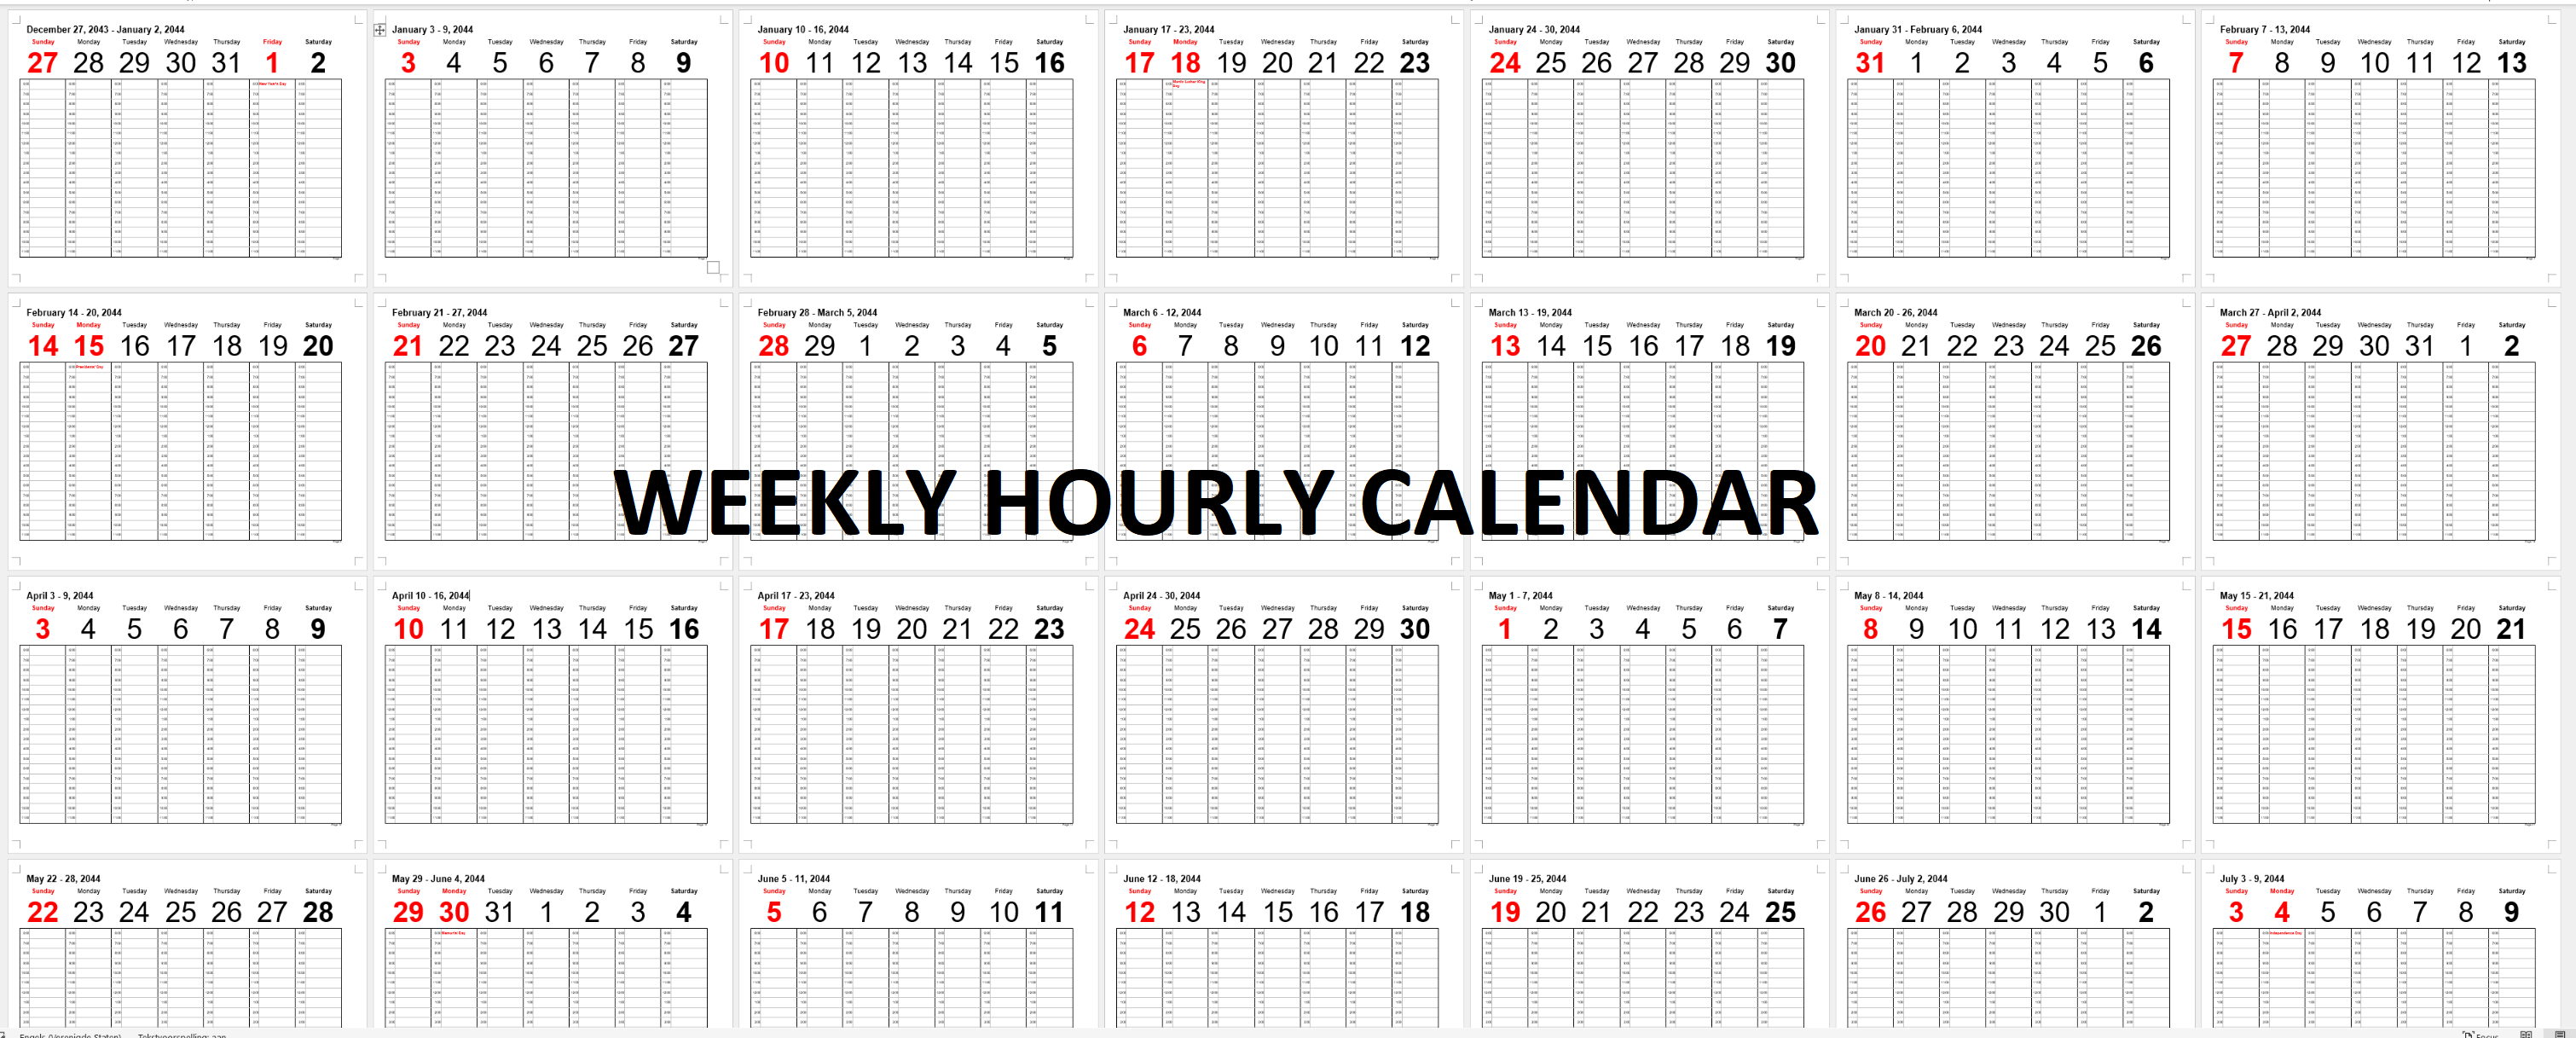 Weekly Hourly Calendar main image